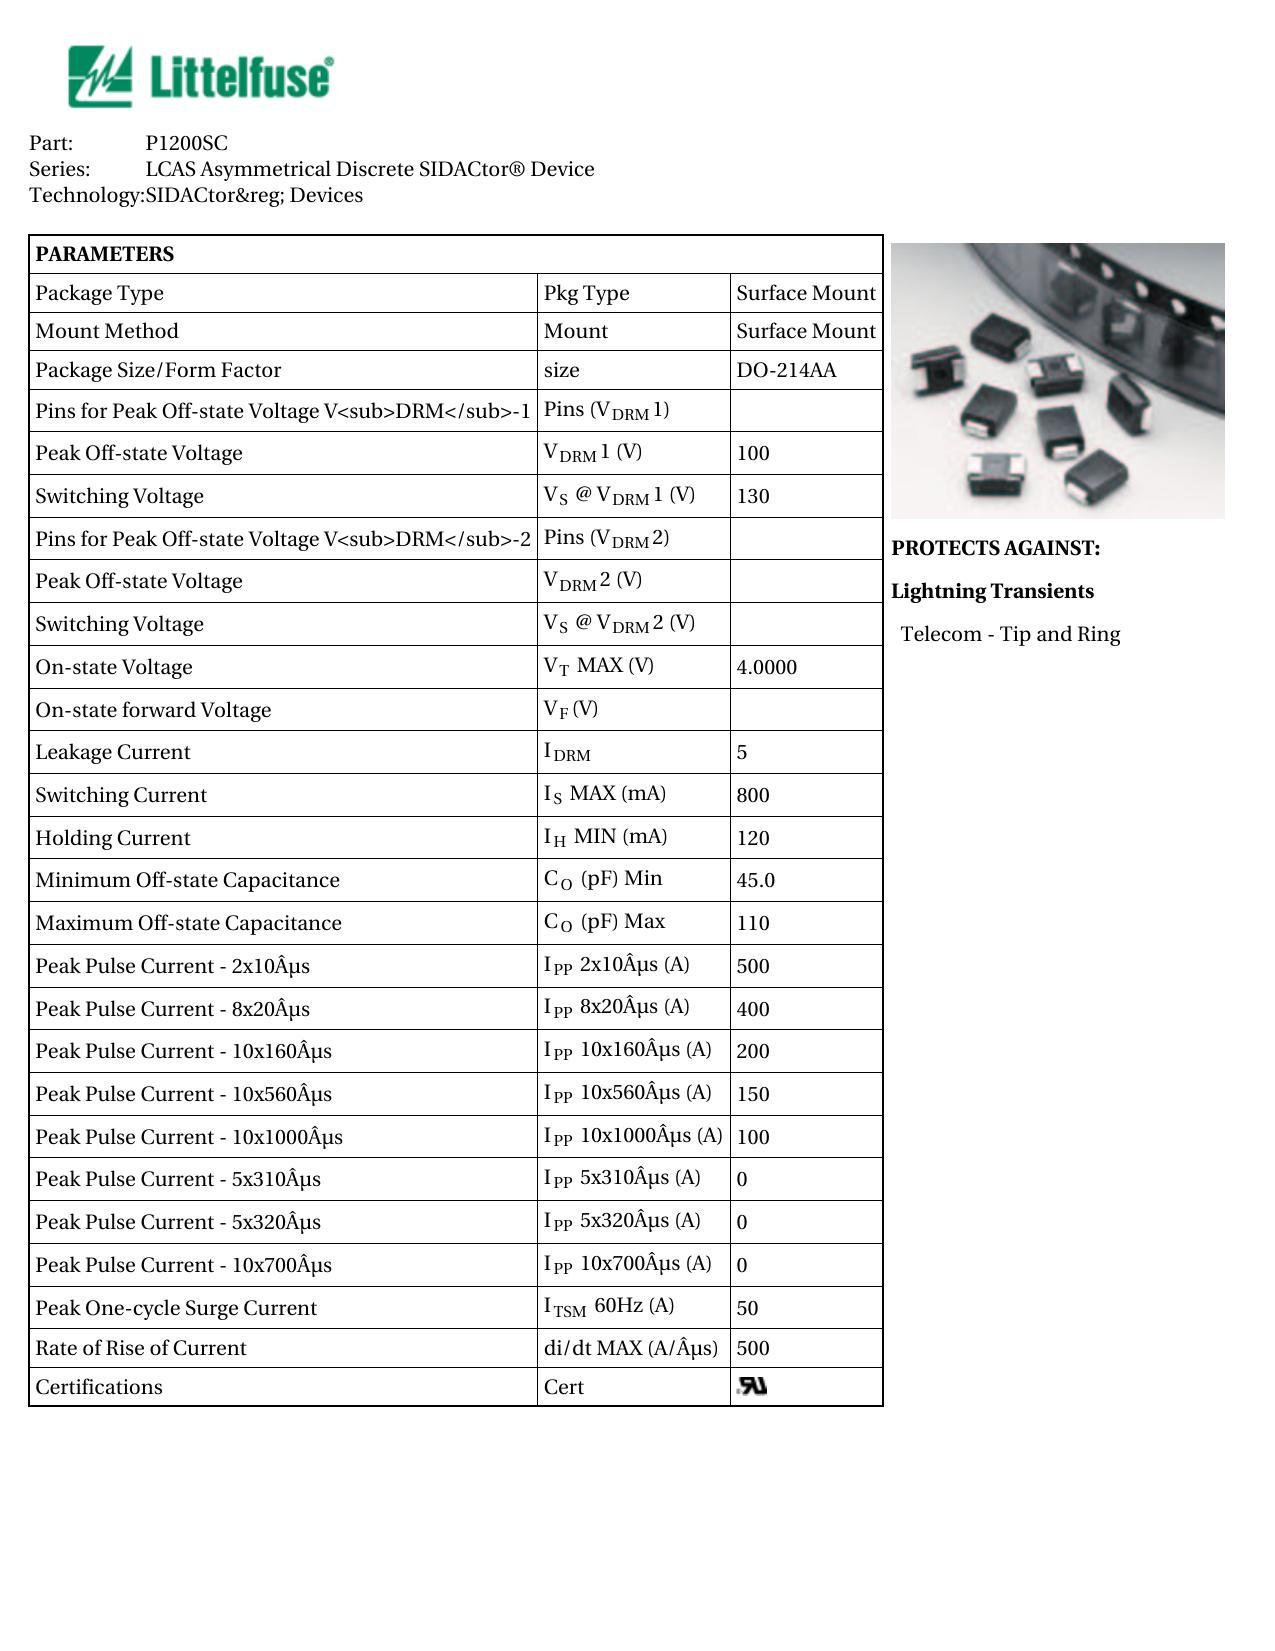 littelfuse-lcas-series-p1zoosc-asymmetrical-discrete-sidactor-devices.pdf